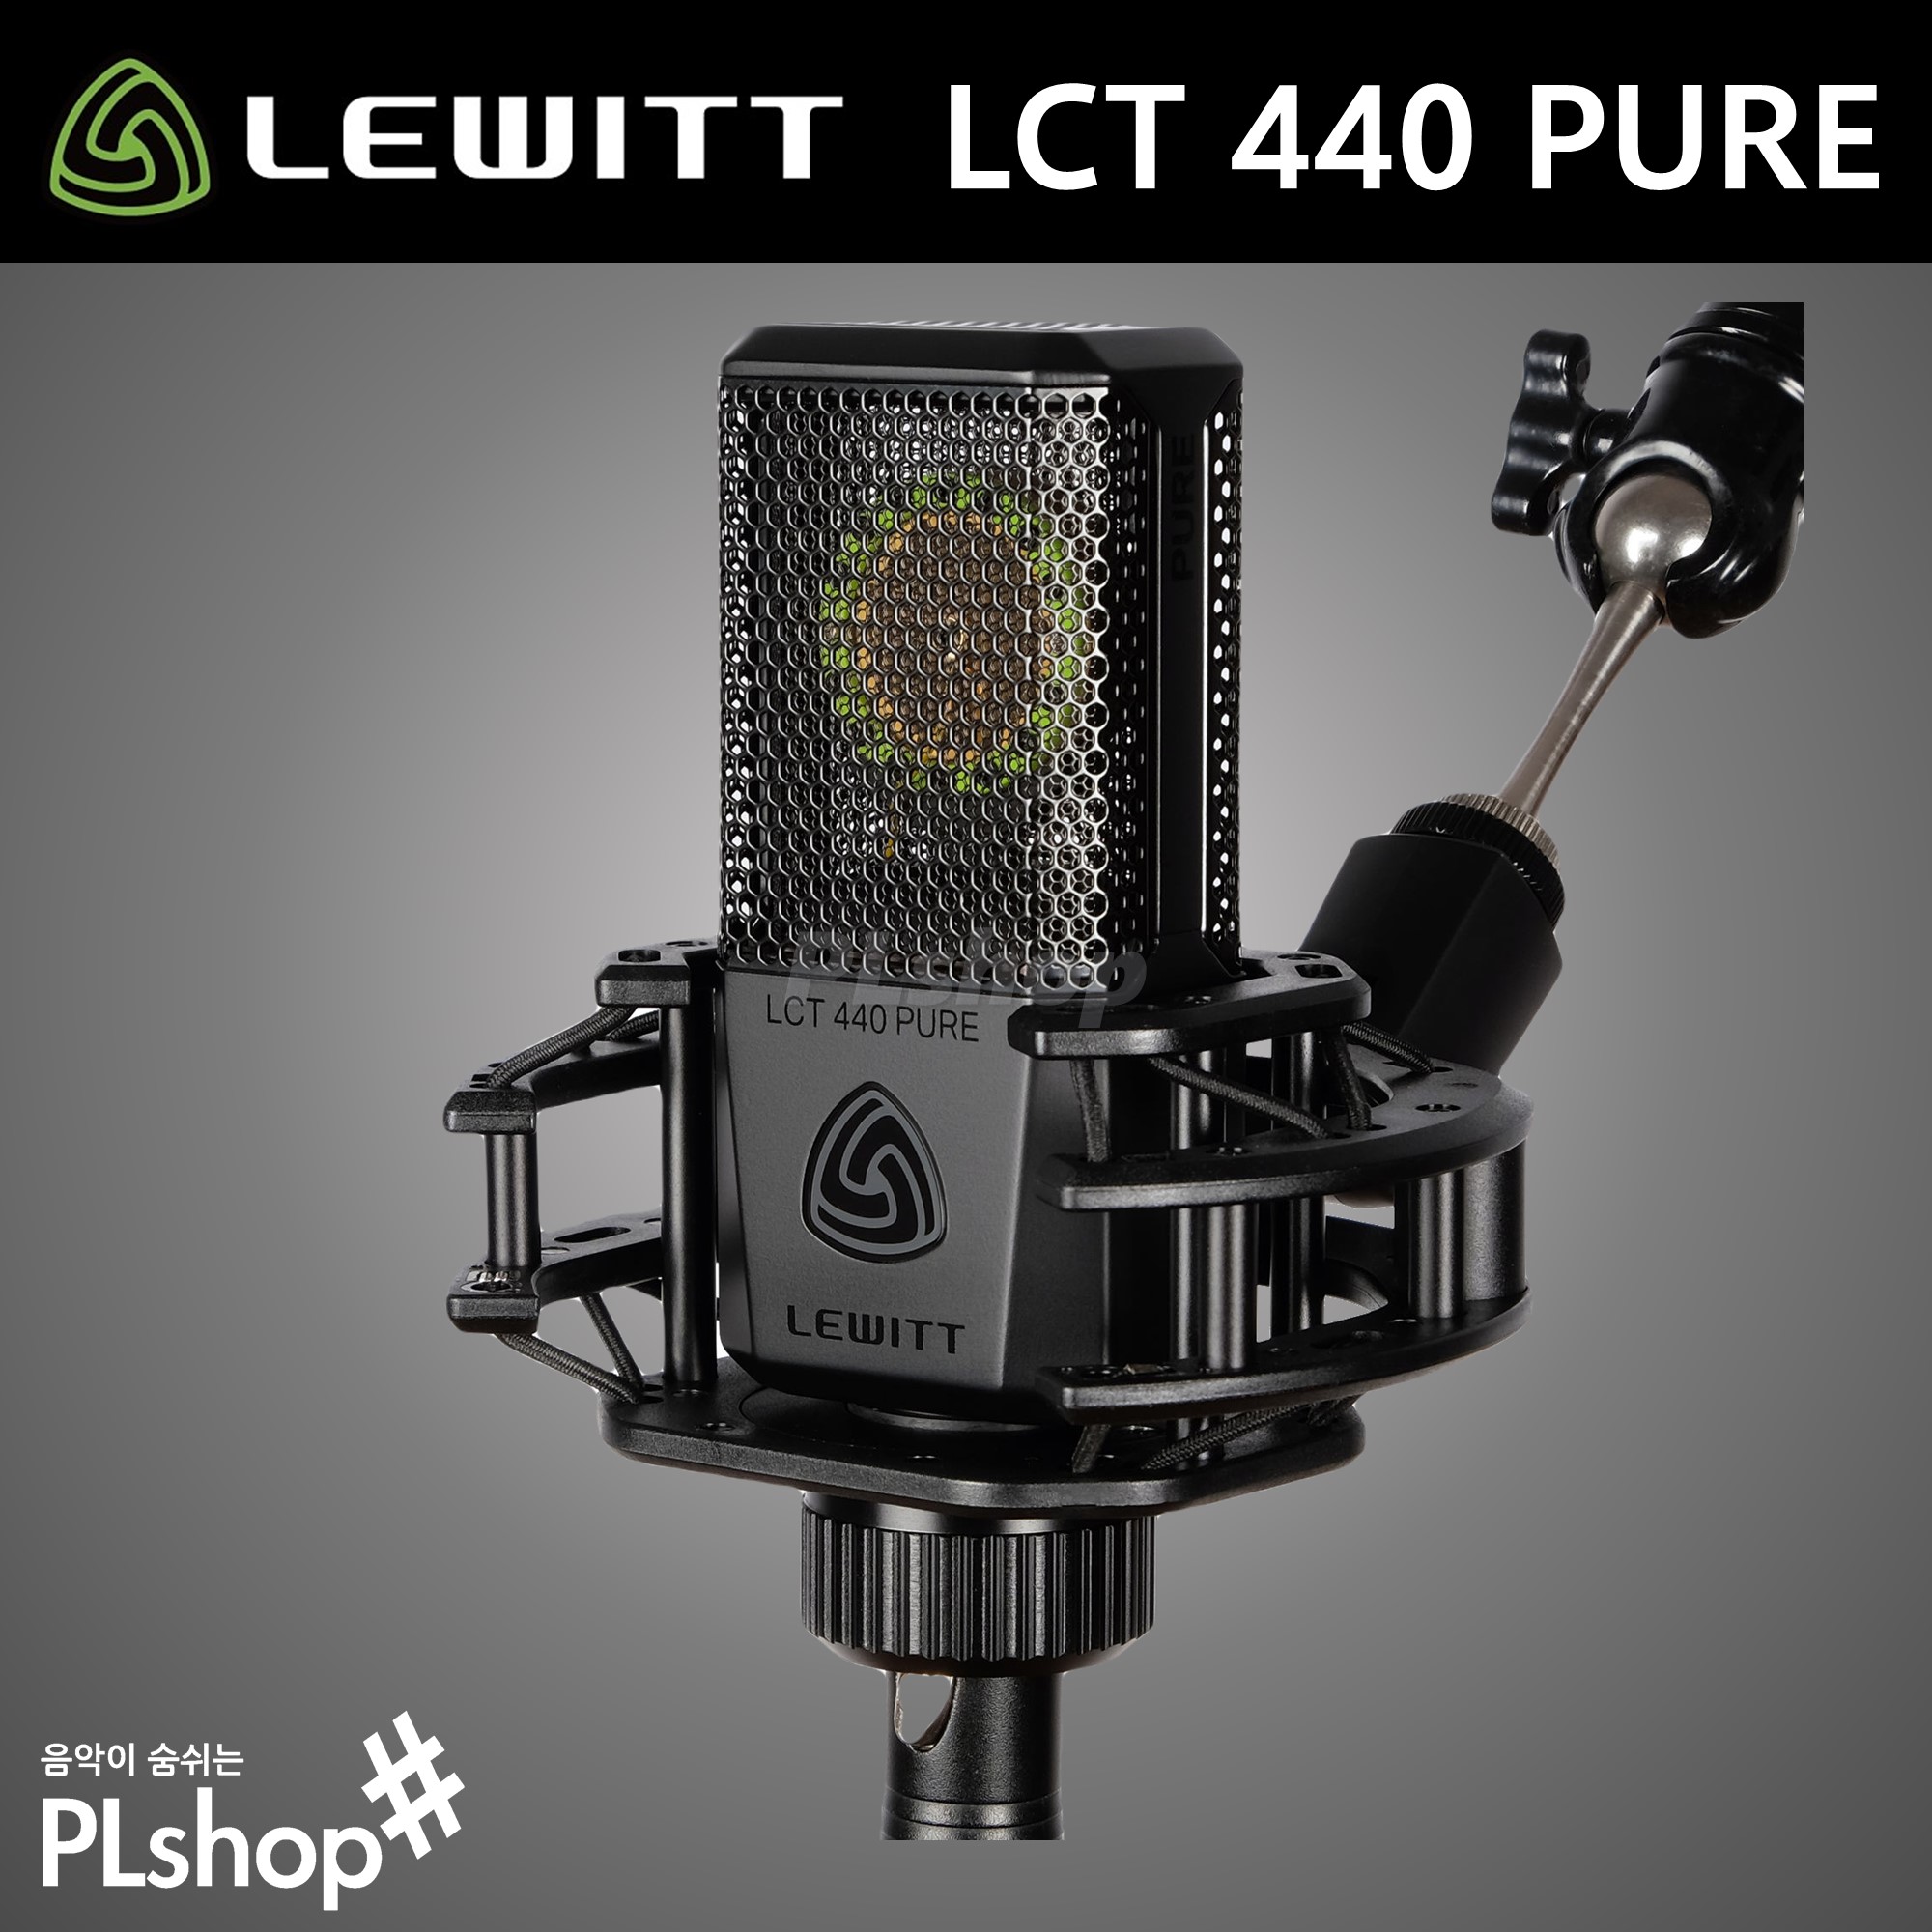 LEWITT lct440 pure - 配信機器・PA機器・レコーディング機器